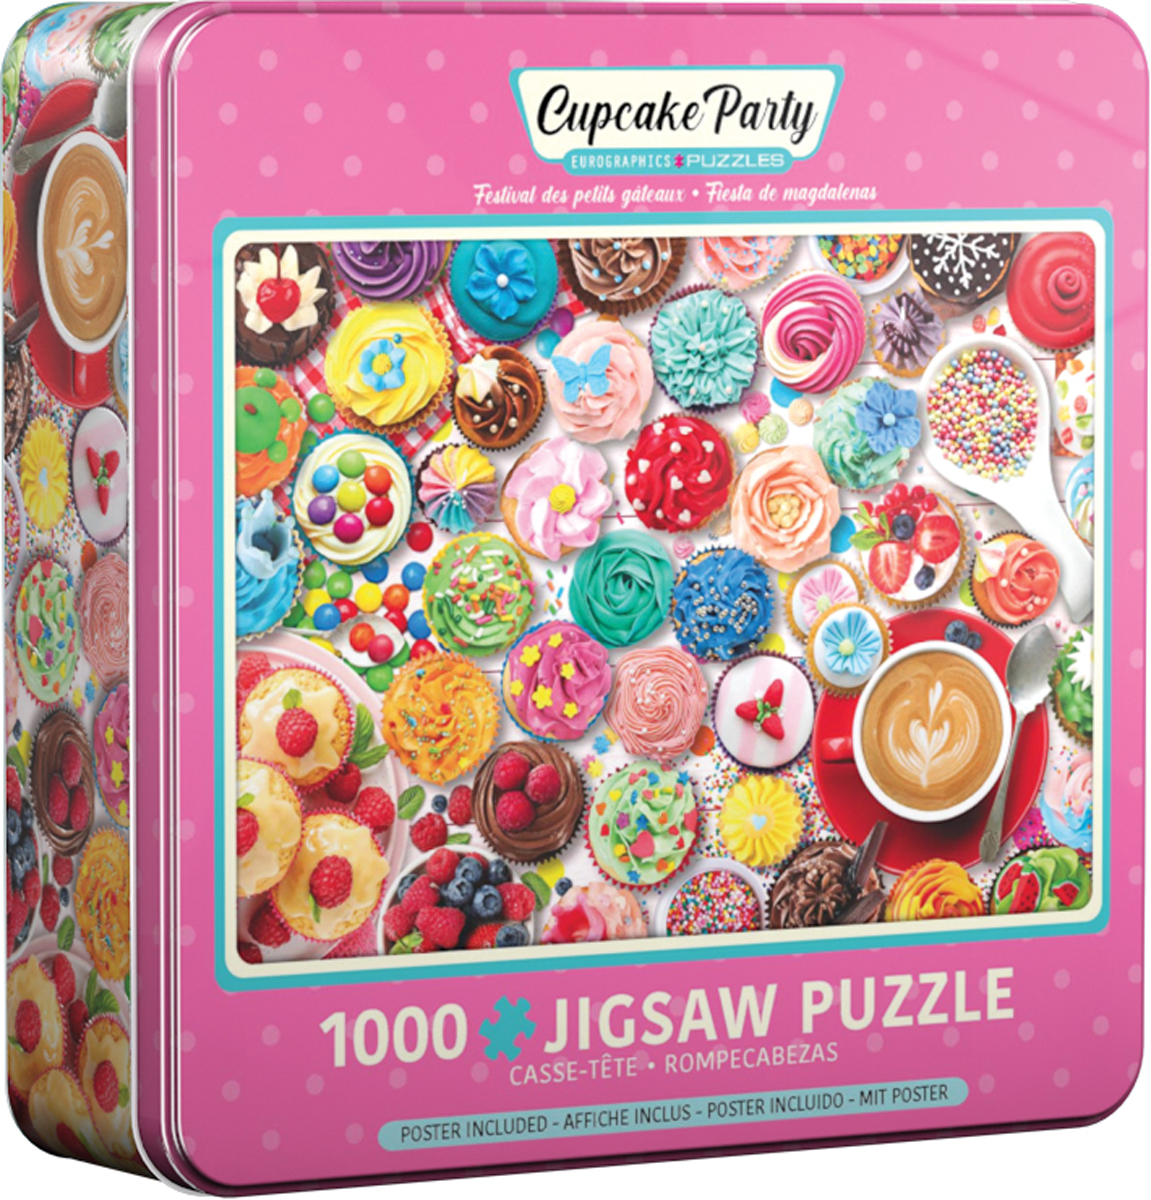 Cupcake Party - Tin Packaging